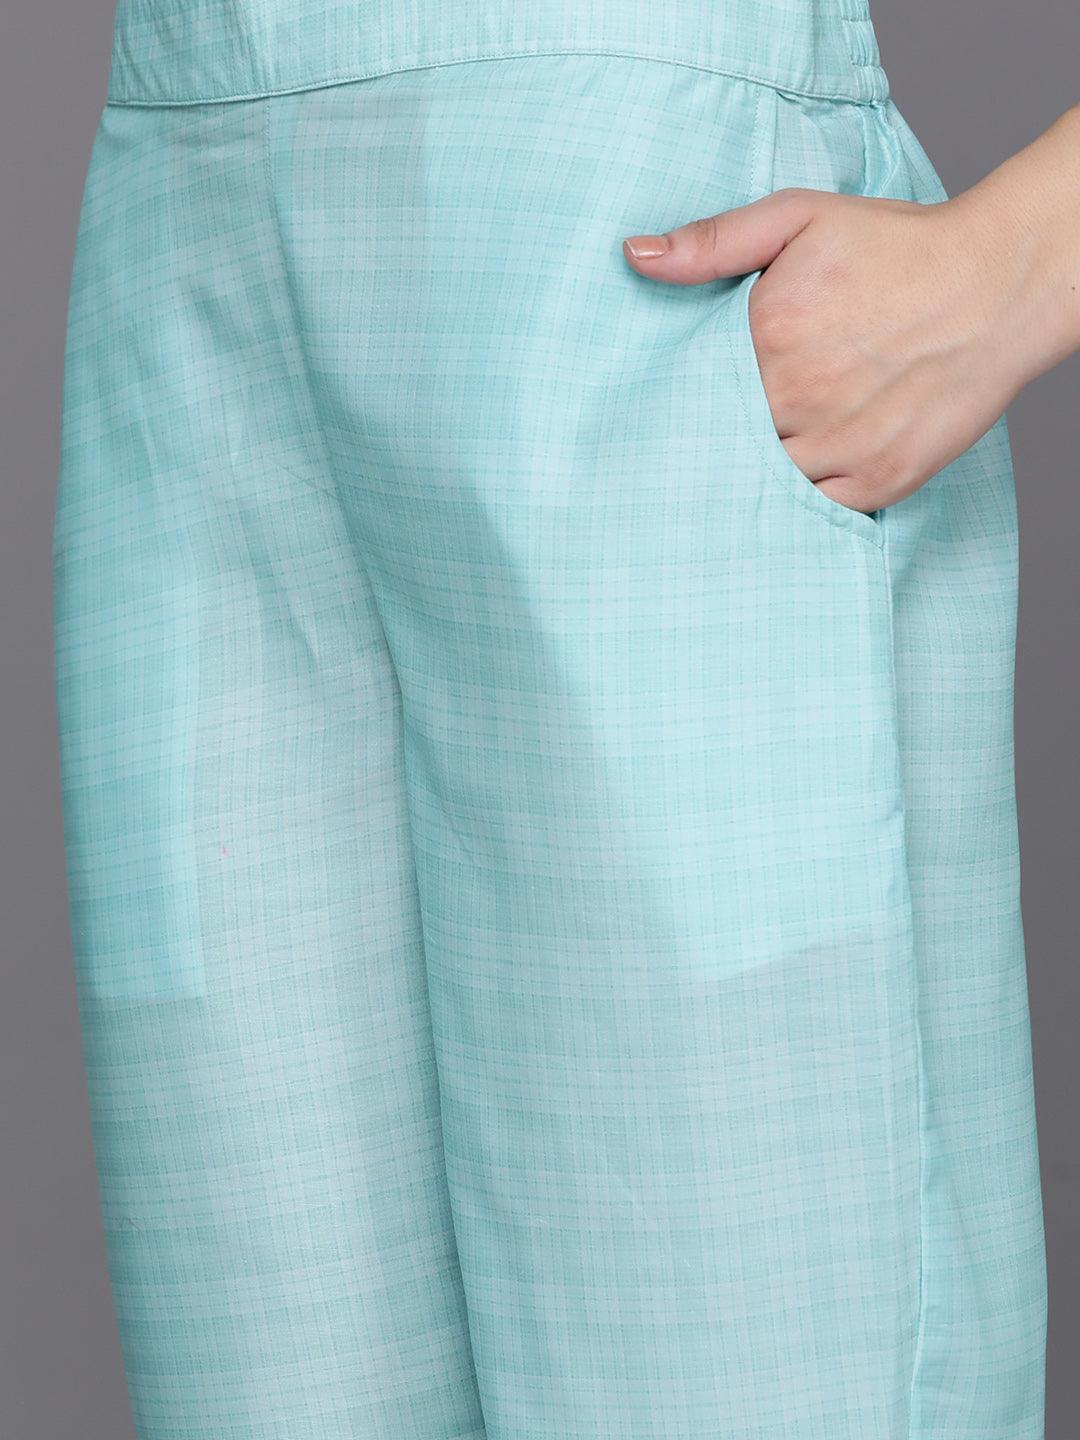 Sea Green Printed Silk Blend Kaftan Kaftan With Trousers